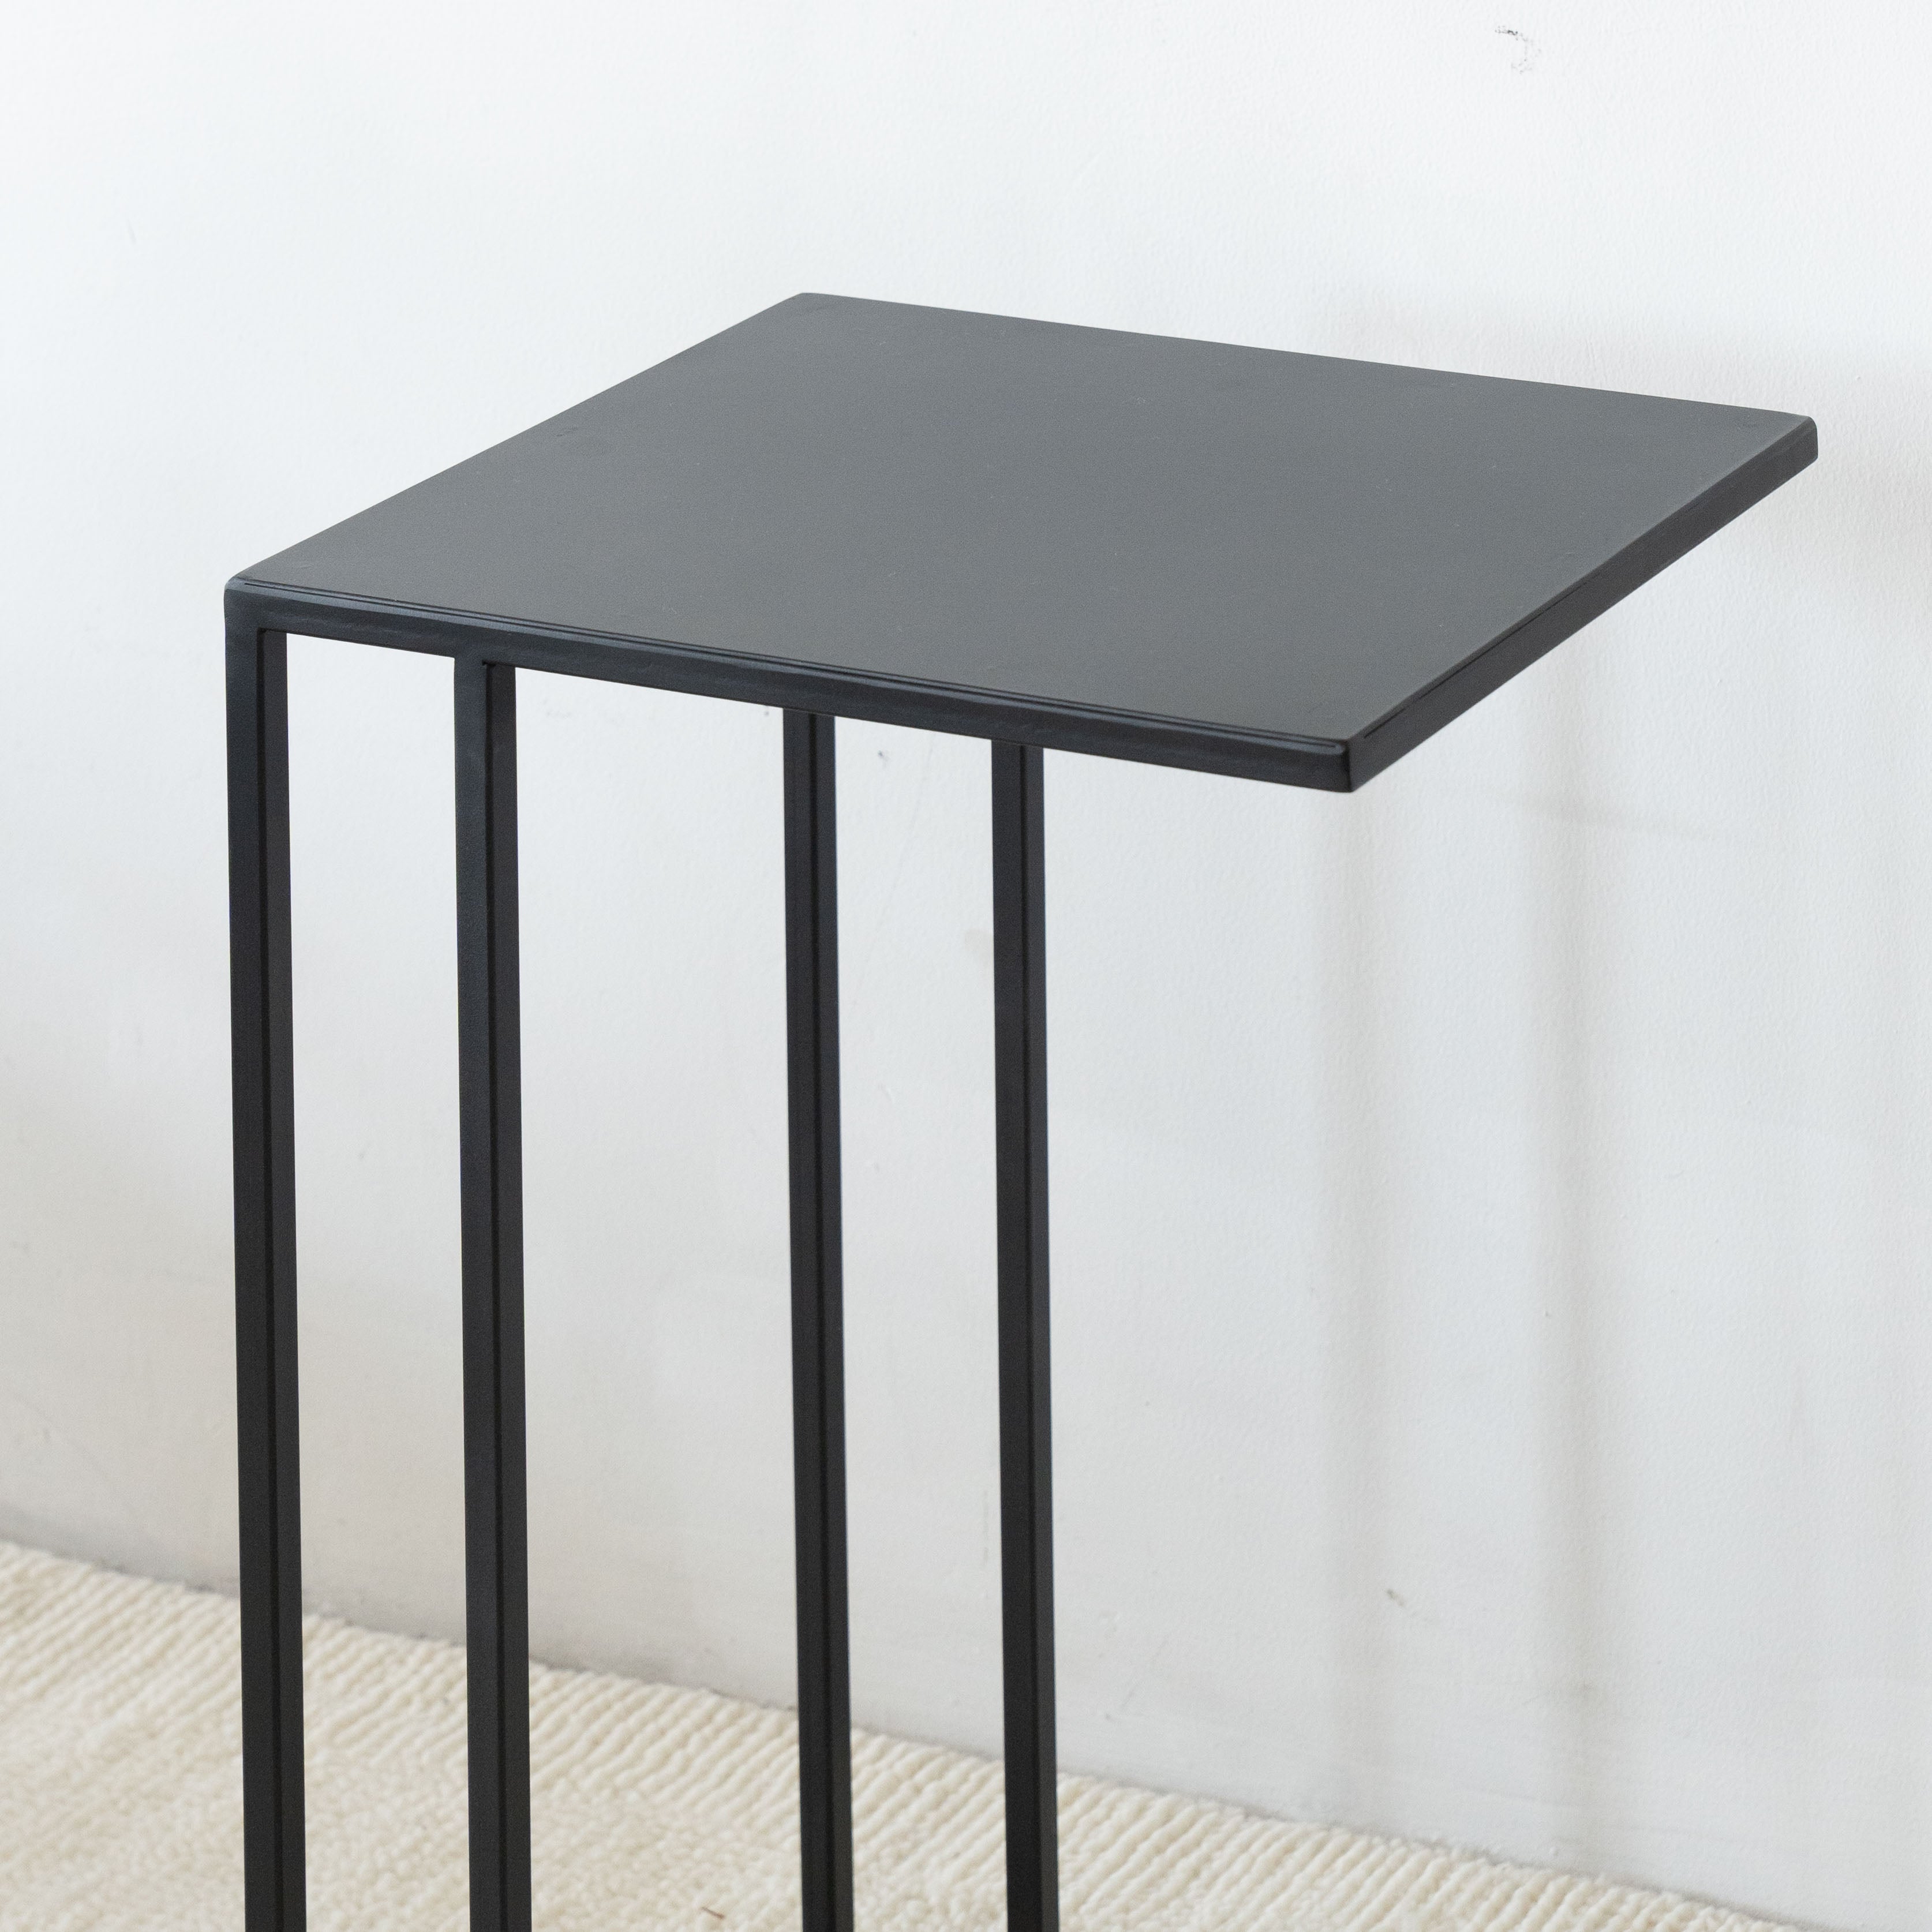 Monochrome Side Table C-Shape  - WS Living - UAE - Side Table Wood and steel Furnitures - Dubai